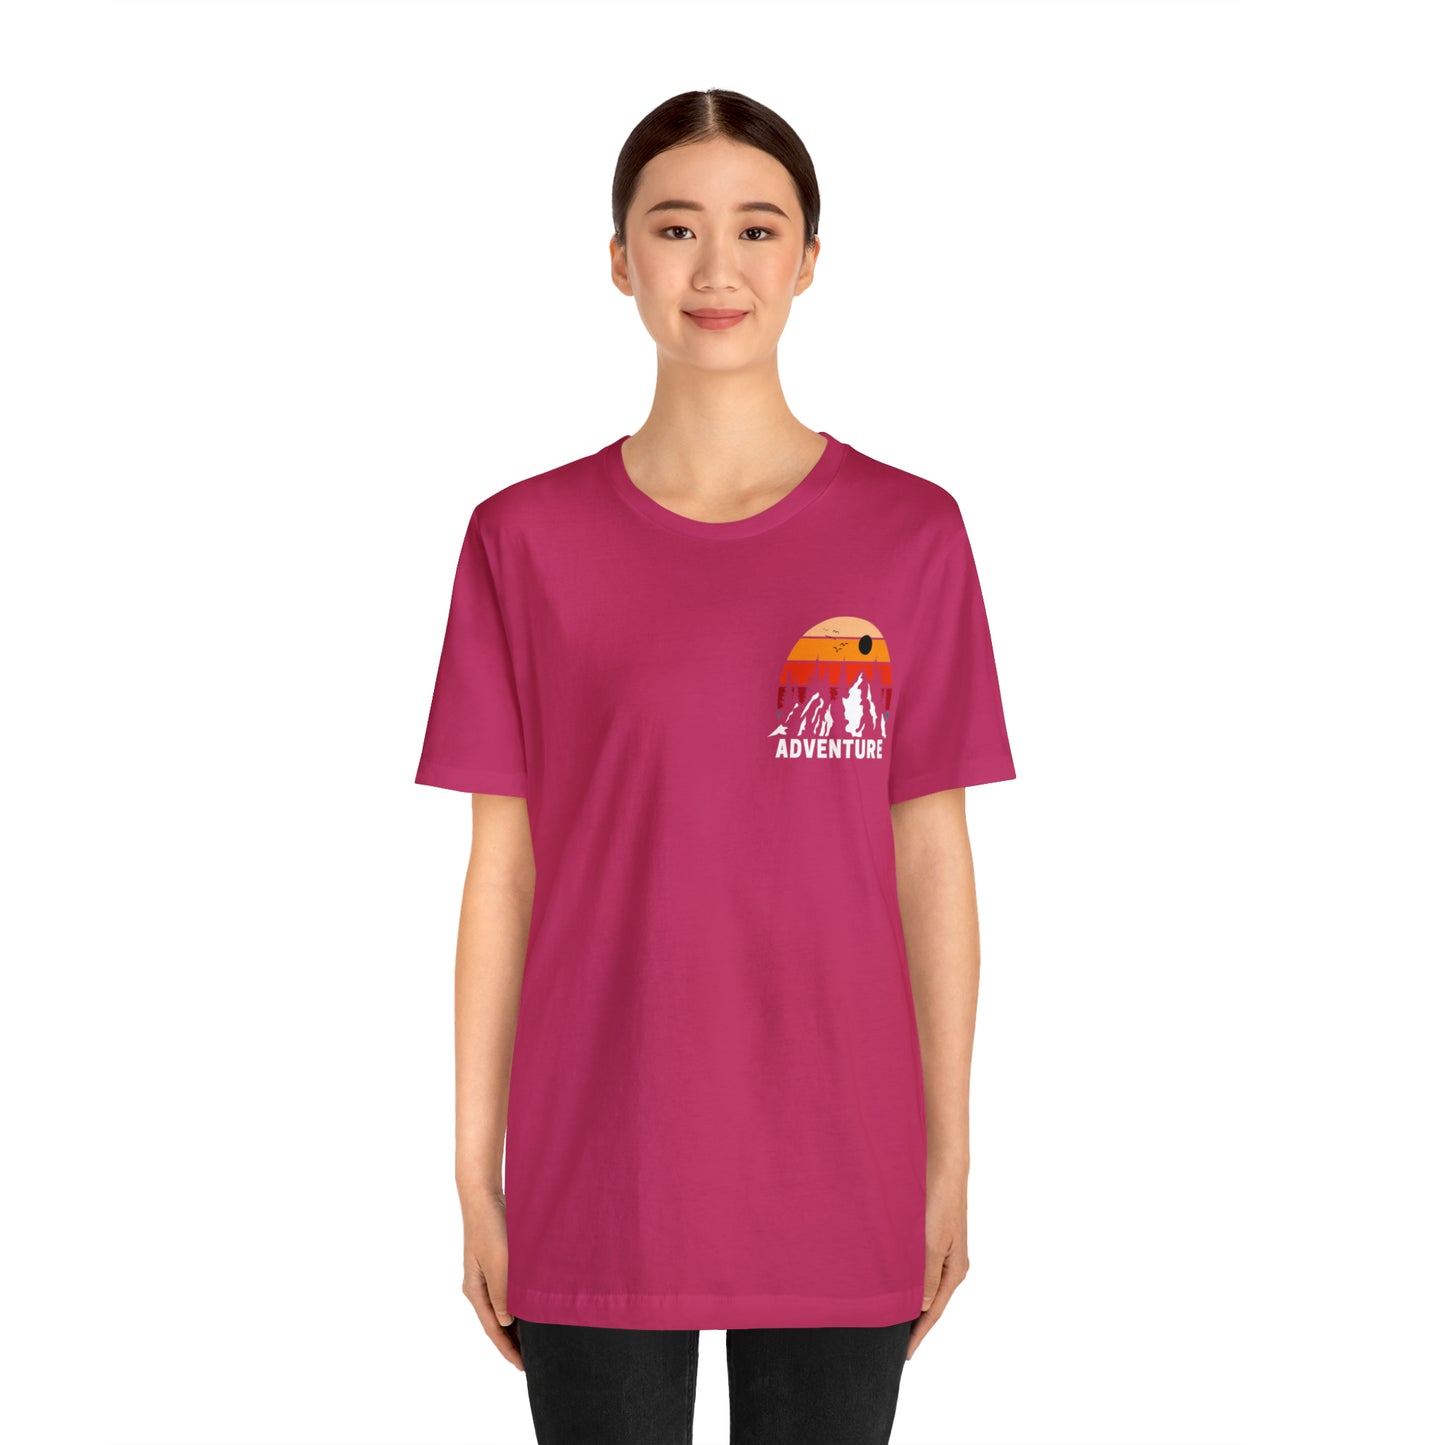 Unisex Jersey WoA T-Shirt